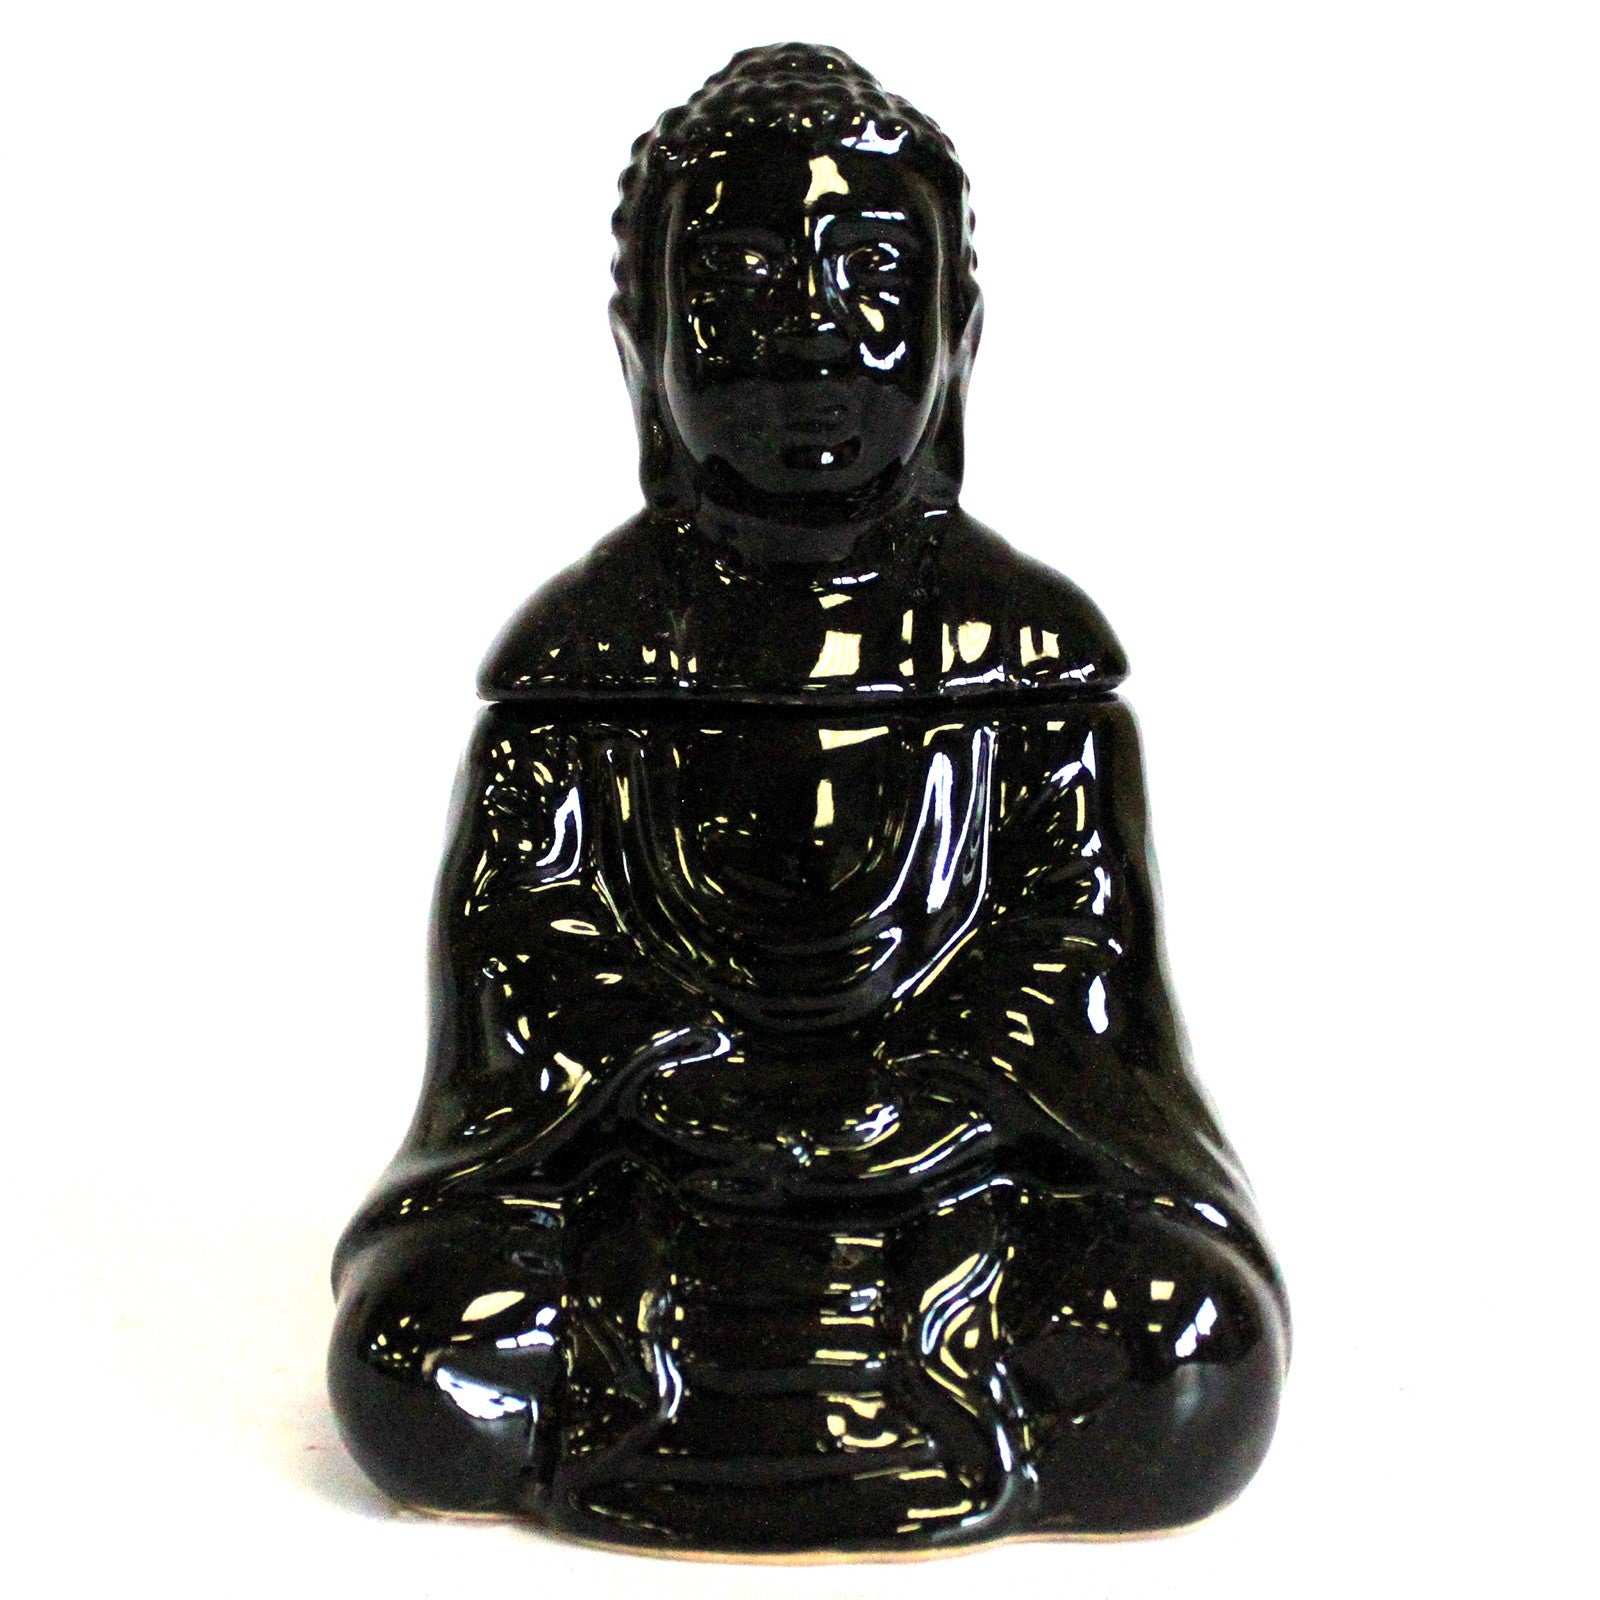 View Sitting Buddha Oil Burner Black information